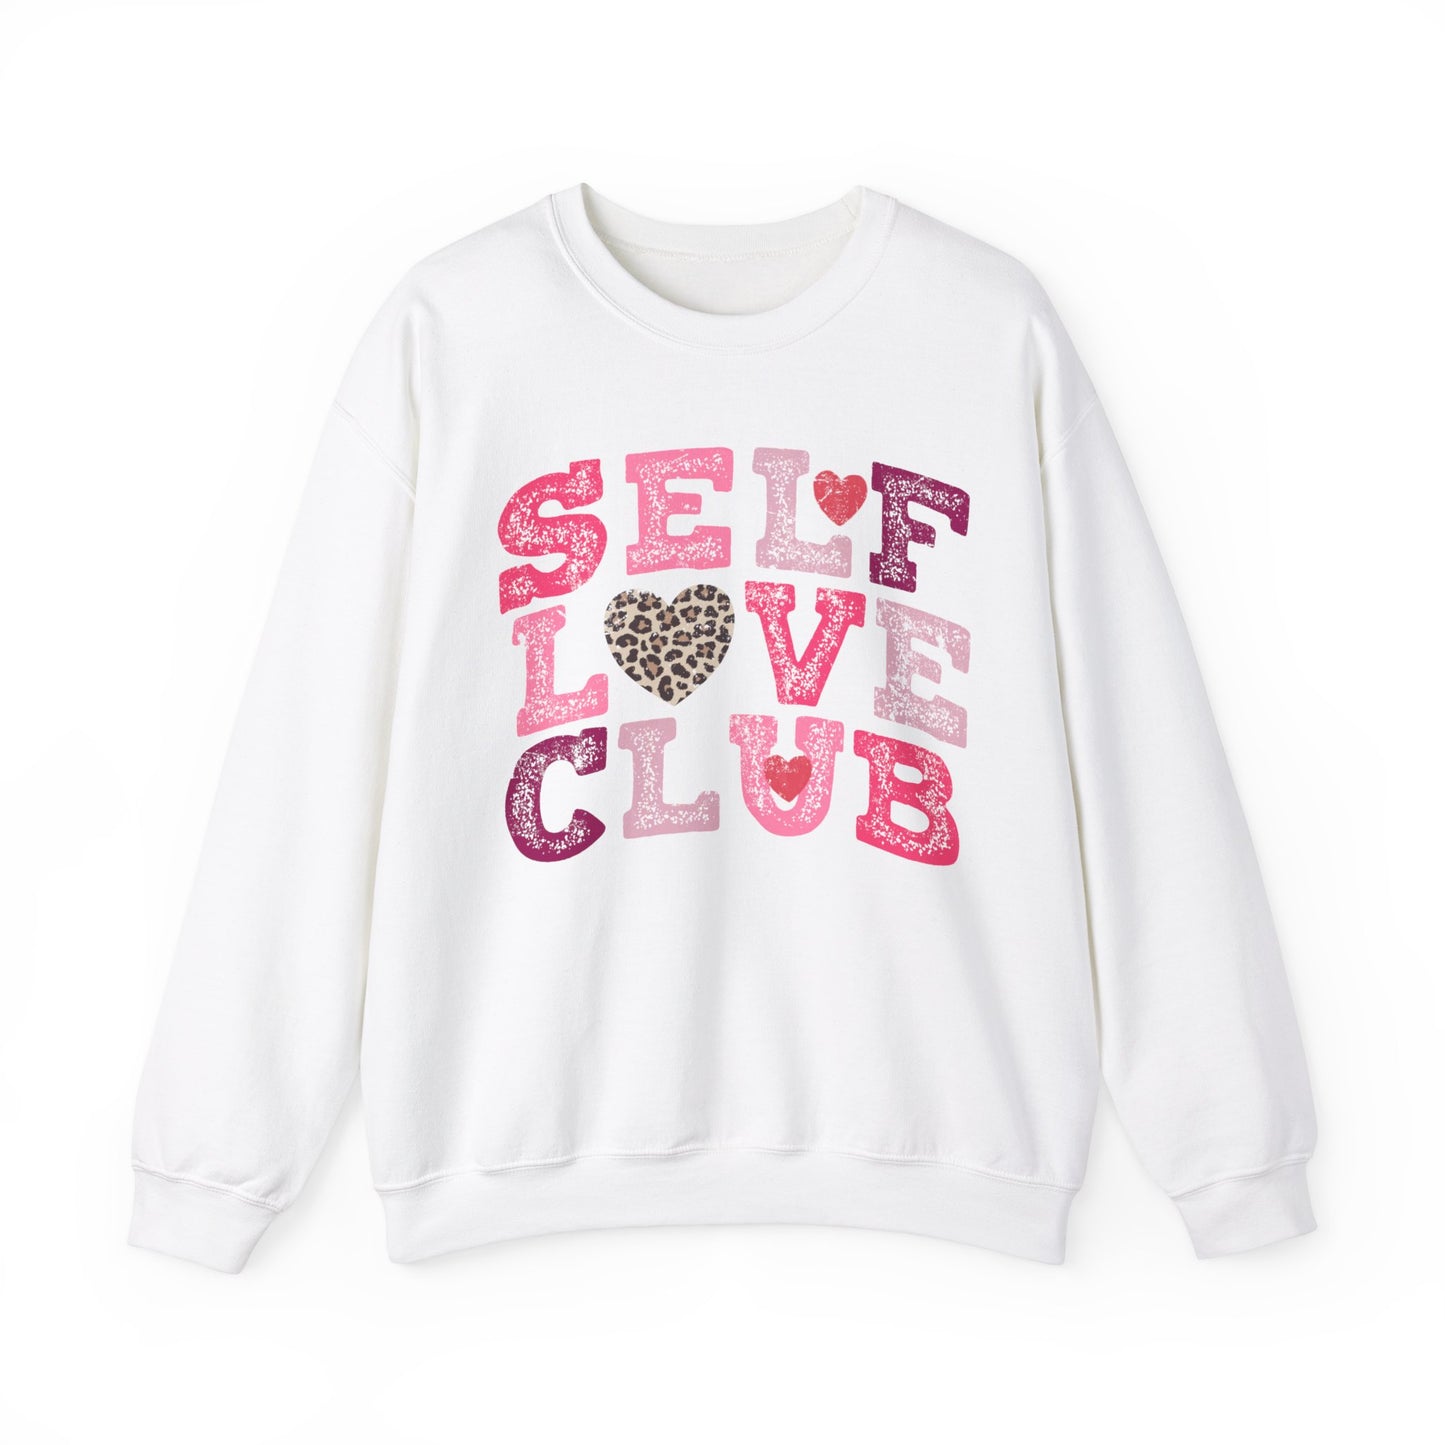 Self Love Club Sweatshirt Valentine's Day Sweatshirt, Cute Retro Graphic Crewneck